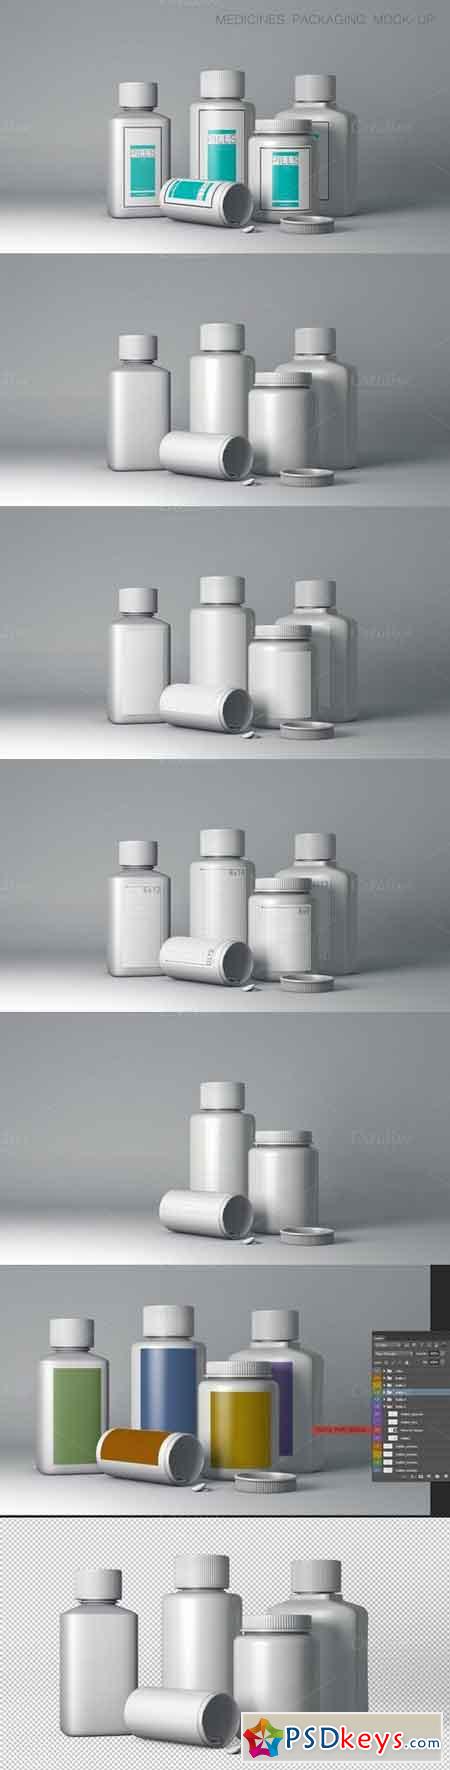 Medicines Packaging Mock-Up 686494